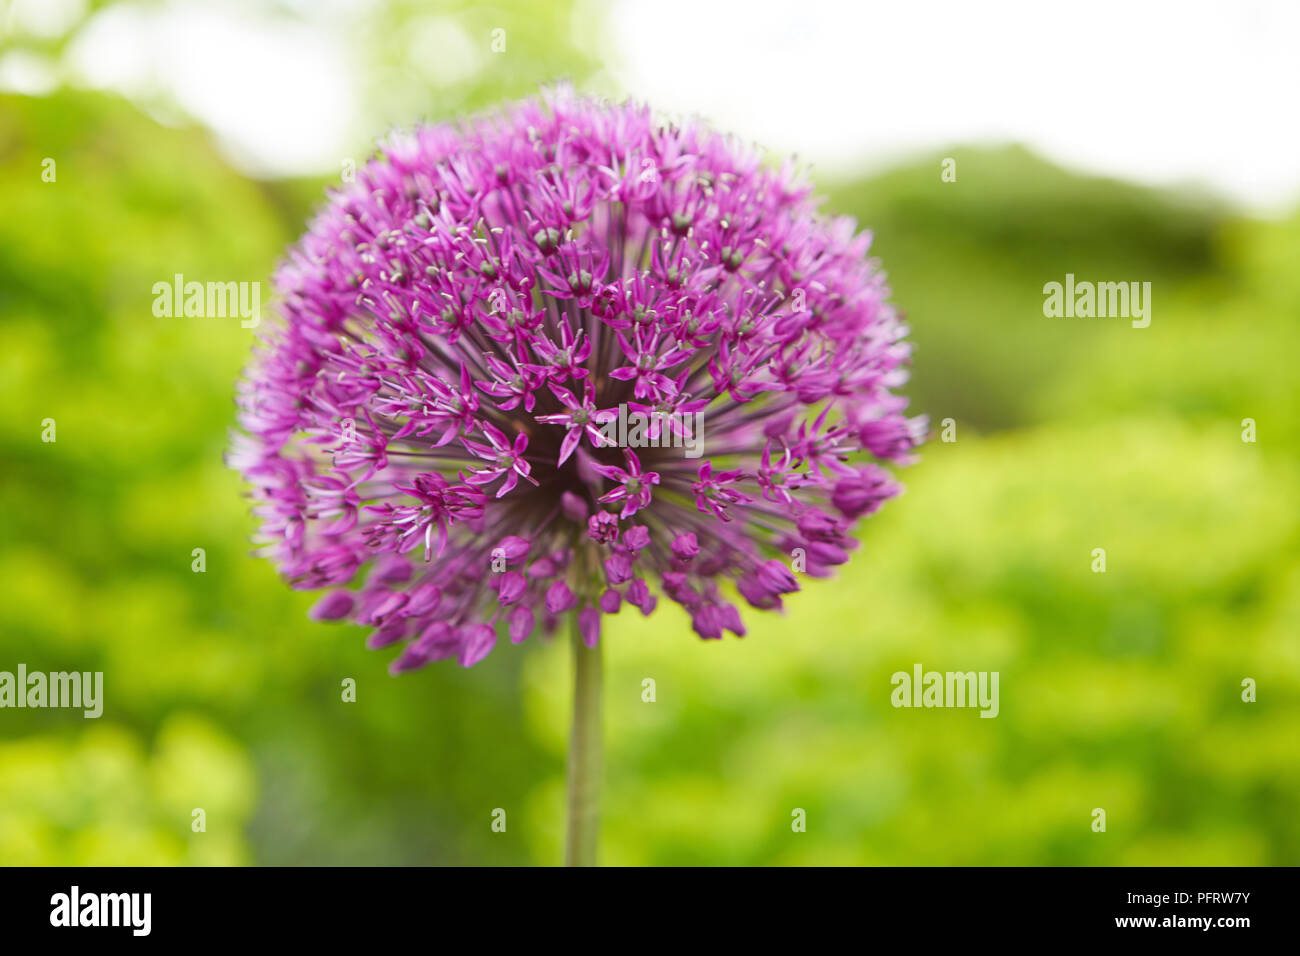 Pink Allium flowerhead Stock Photo